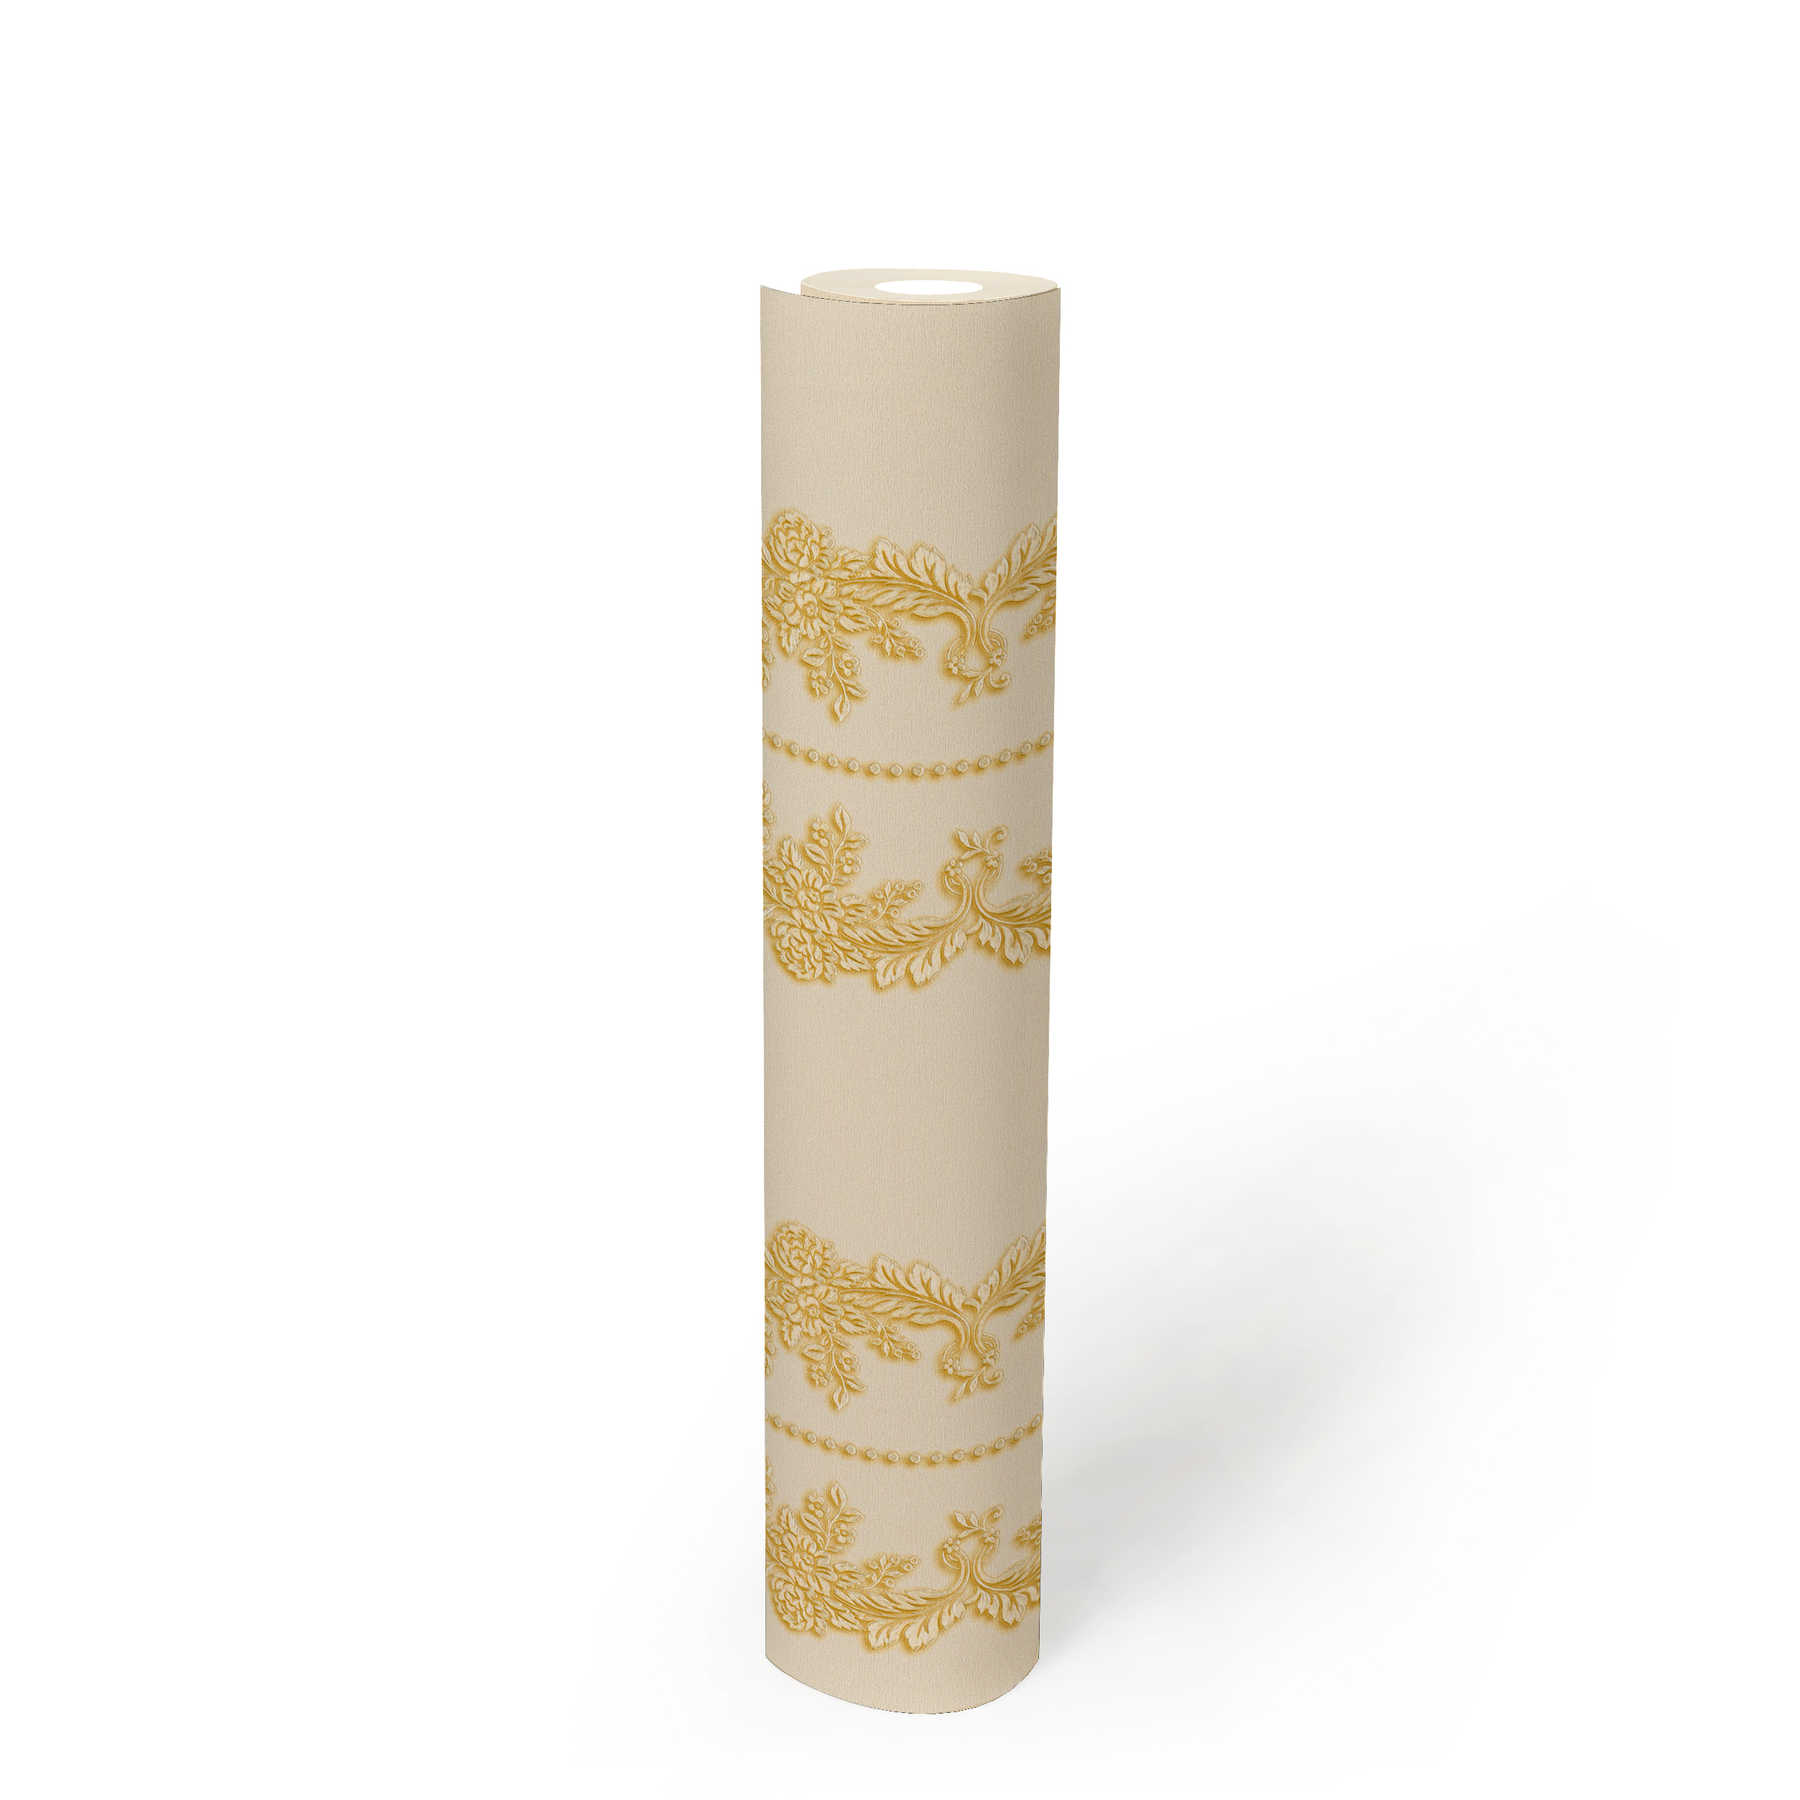             Ornamental wallpaper floral pattern & vines - cream, gold
        